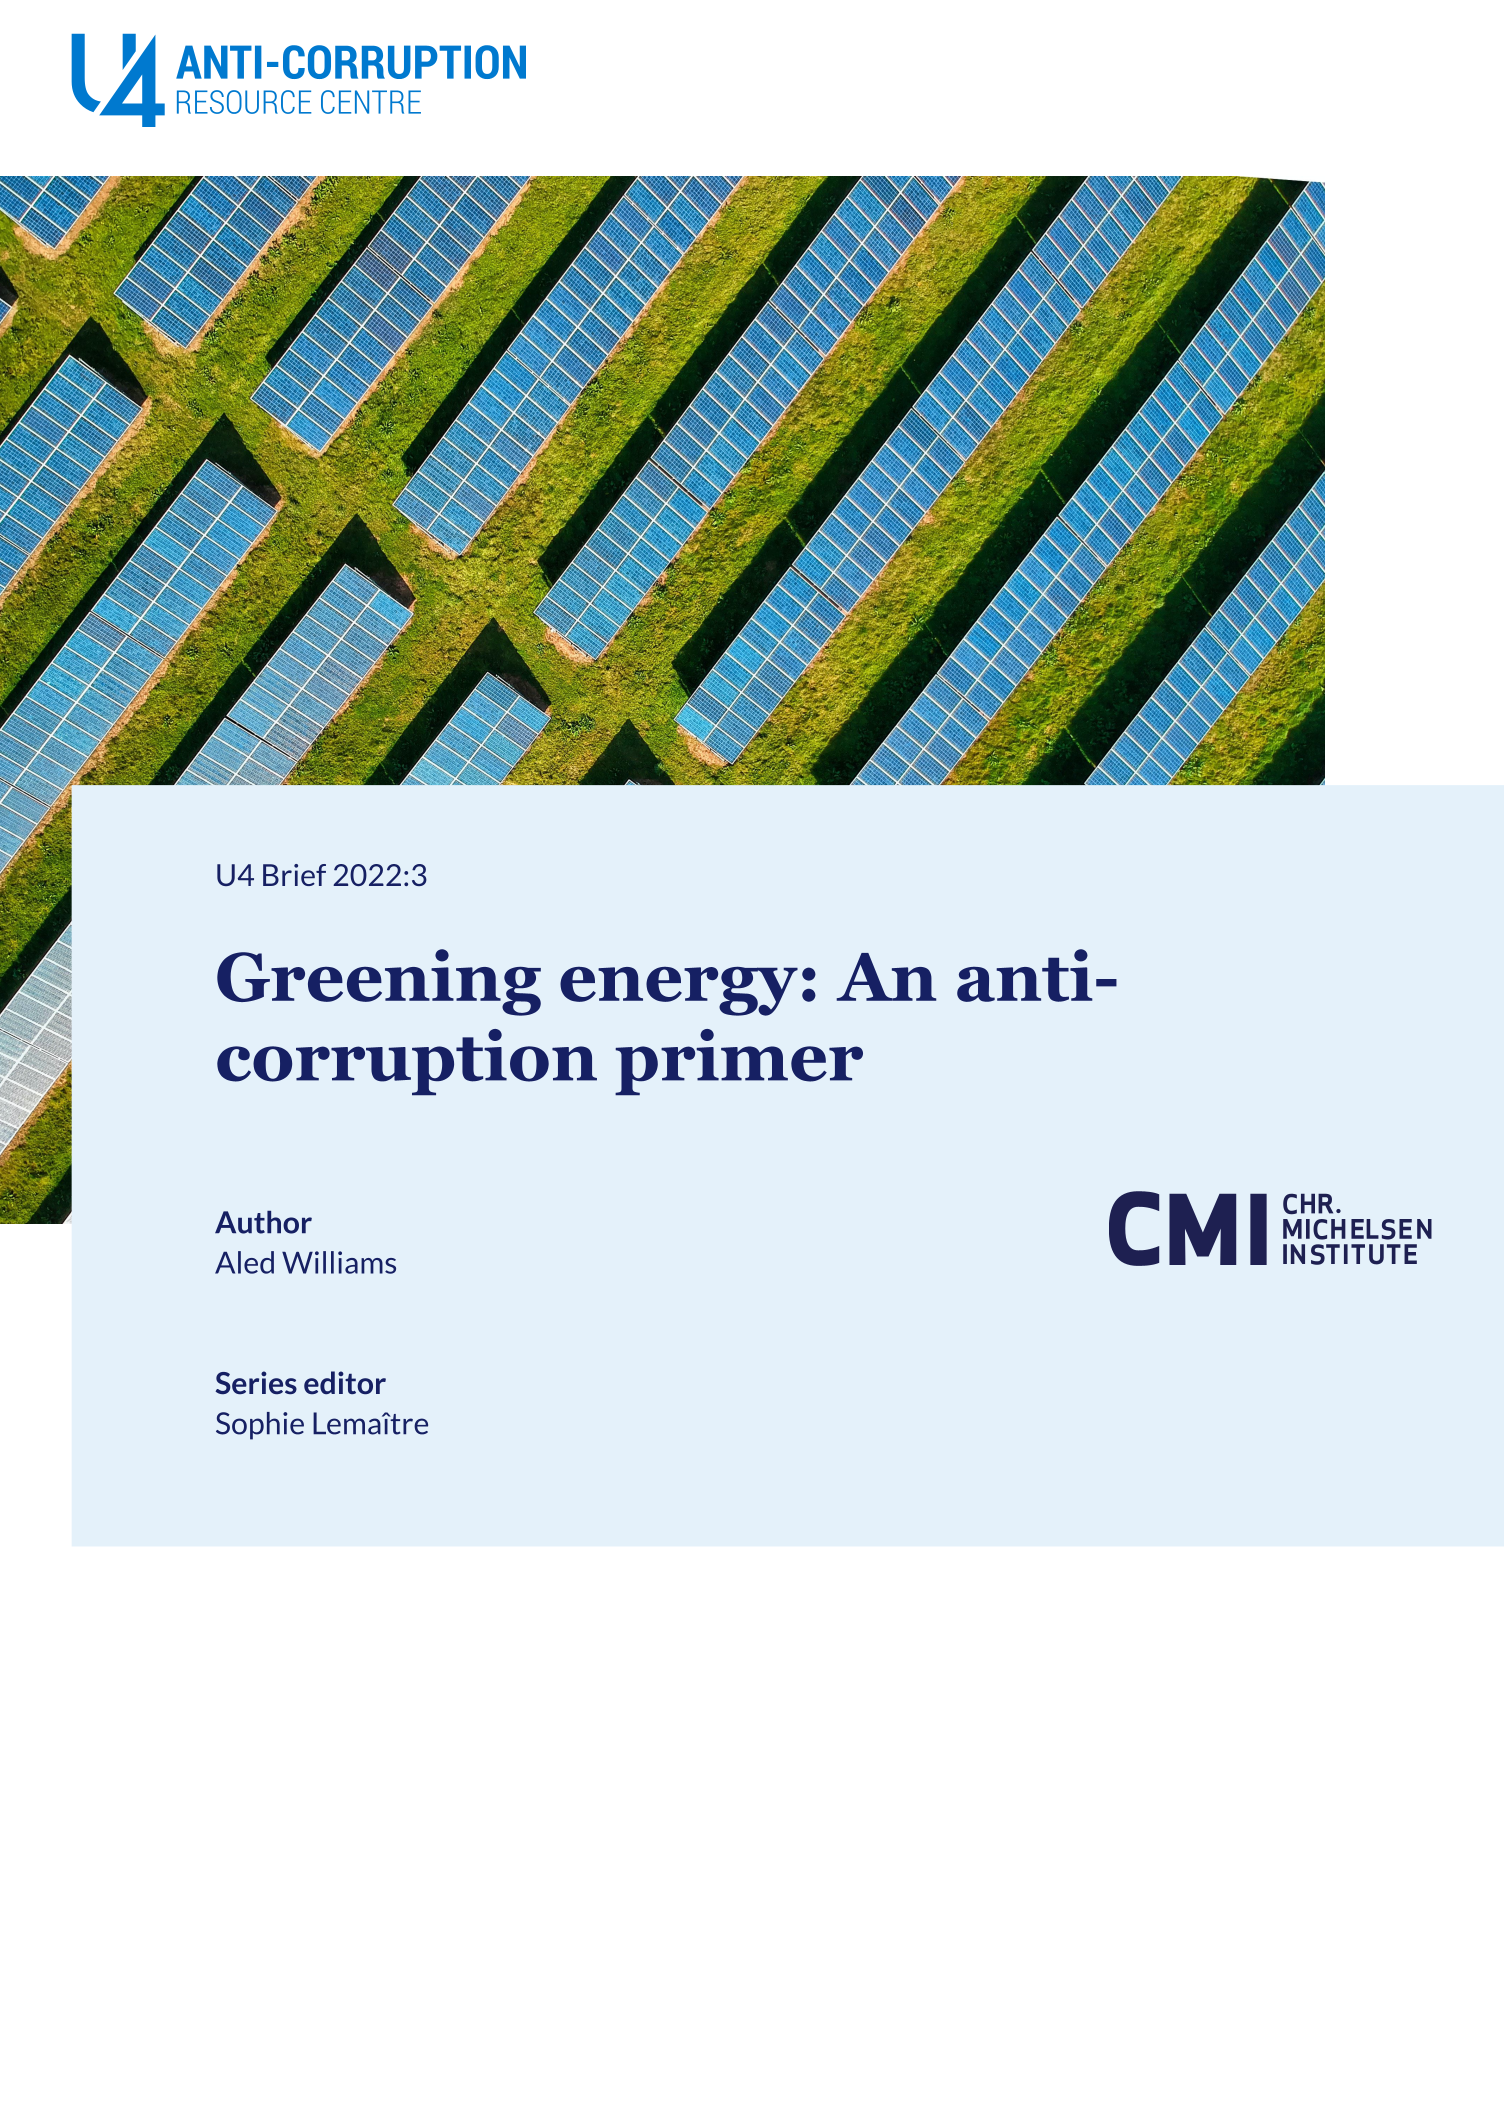 Greening energy: An anti-corruption primer